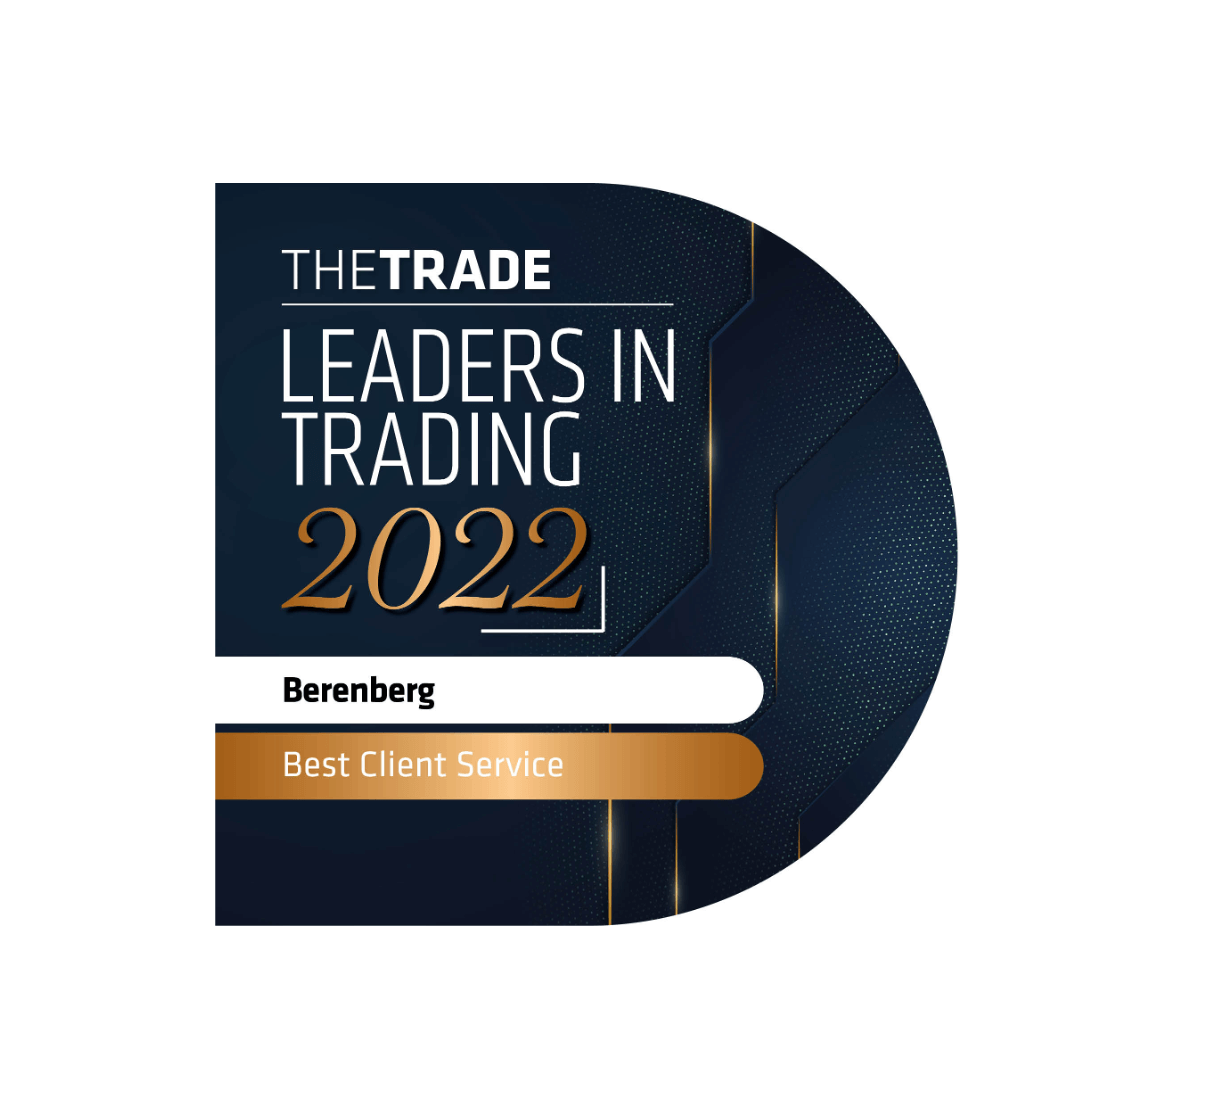 Berenberg Jobs - Careers Website - Awards - The Trade - Best Client Service Award Winner 2022 Image.png